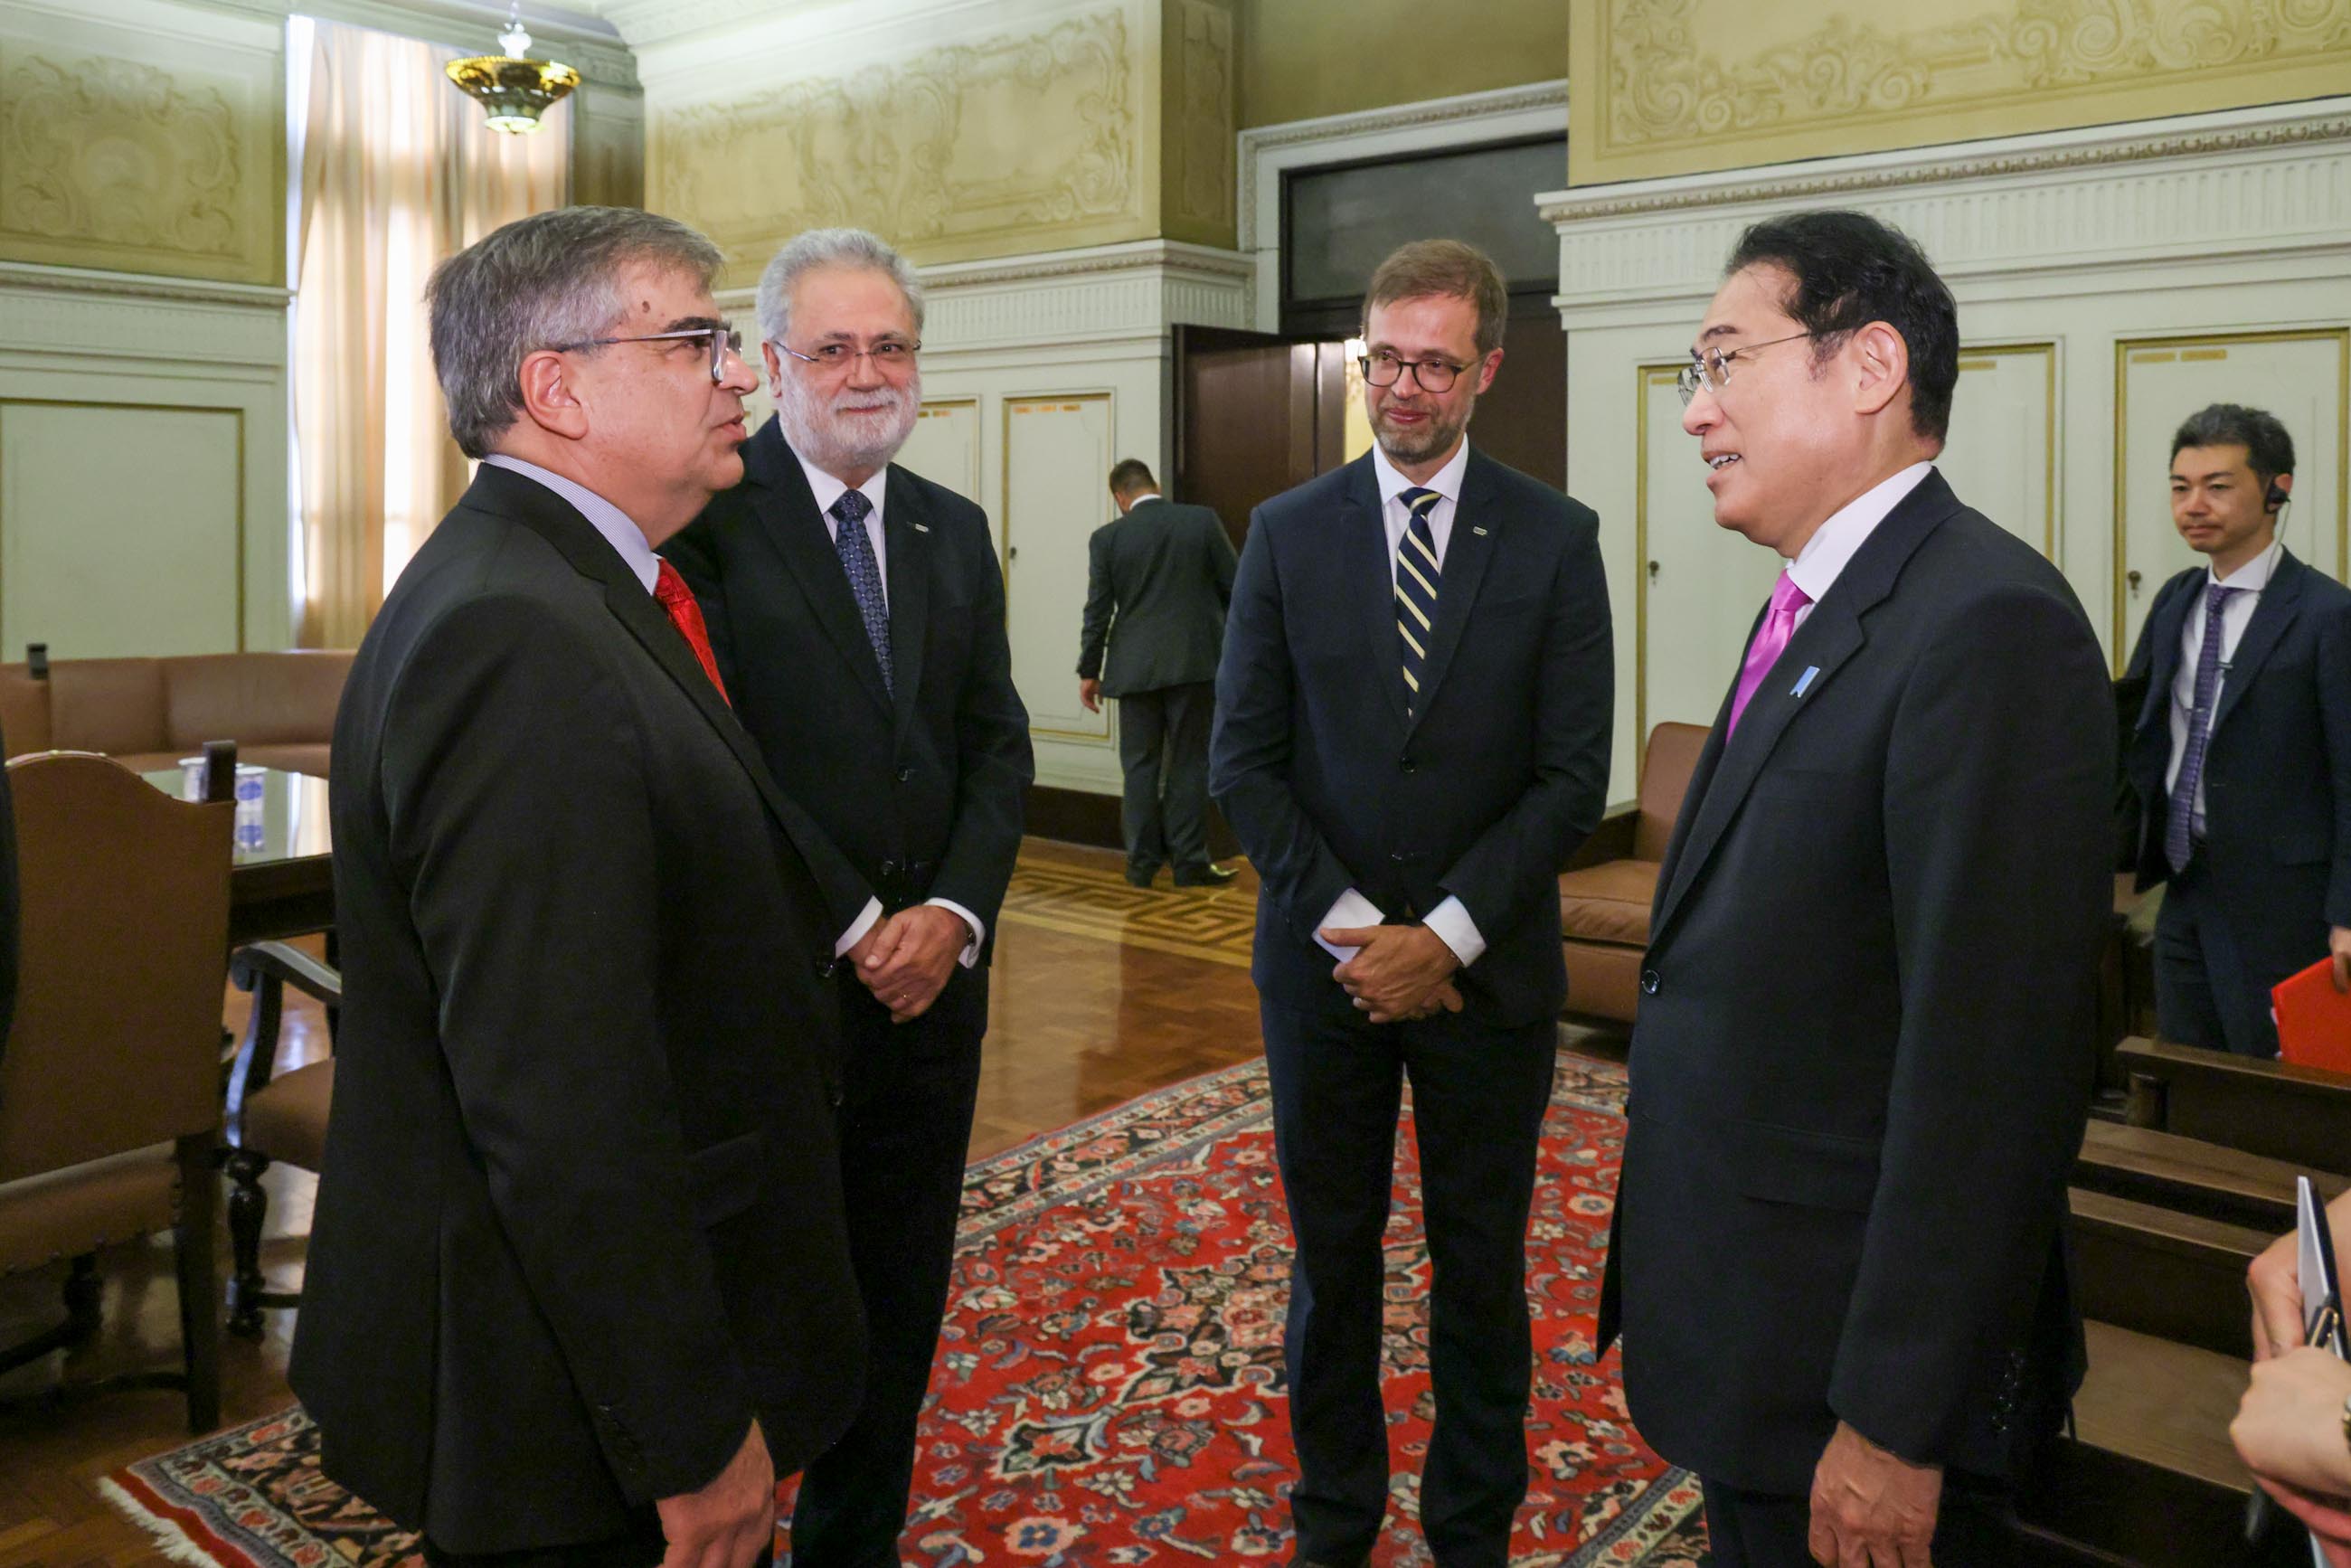 Prime Minister Kishida visiting the University of Sao Paulo